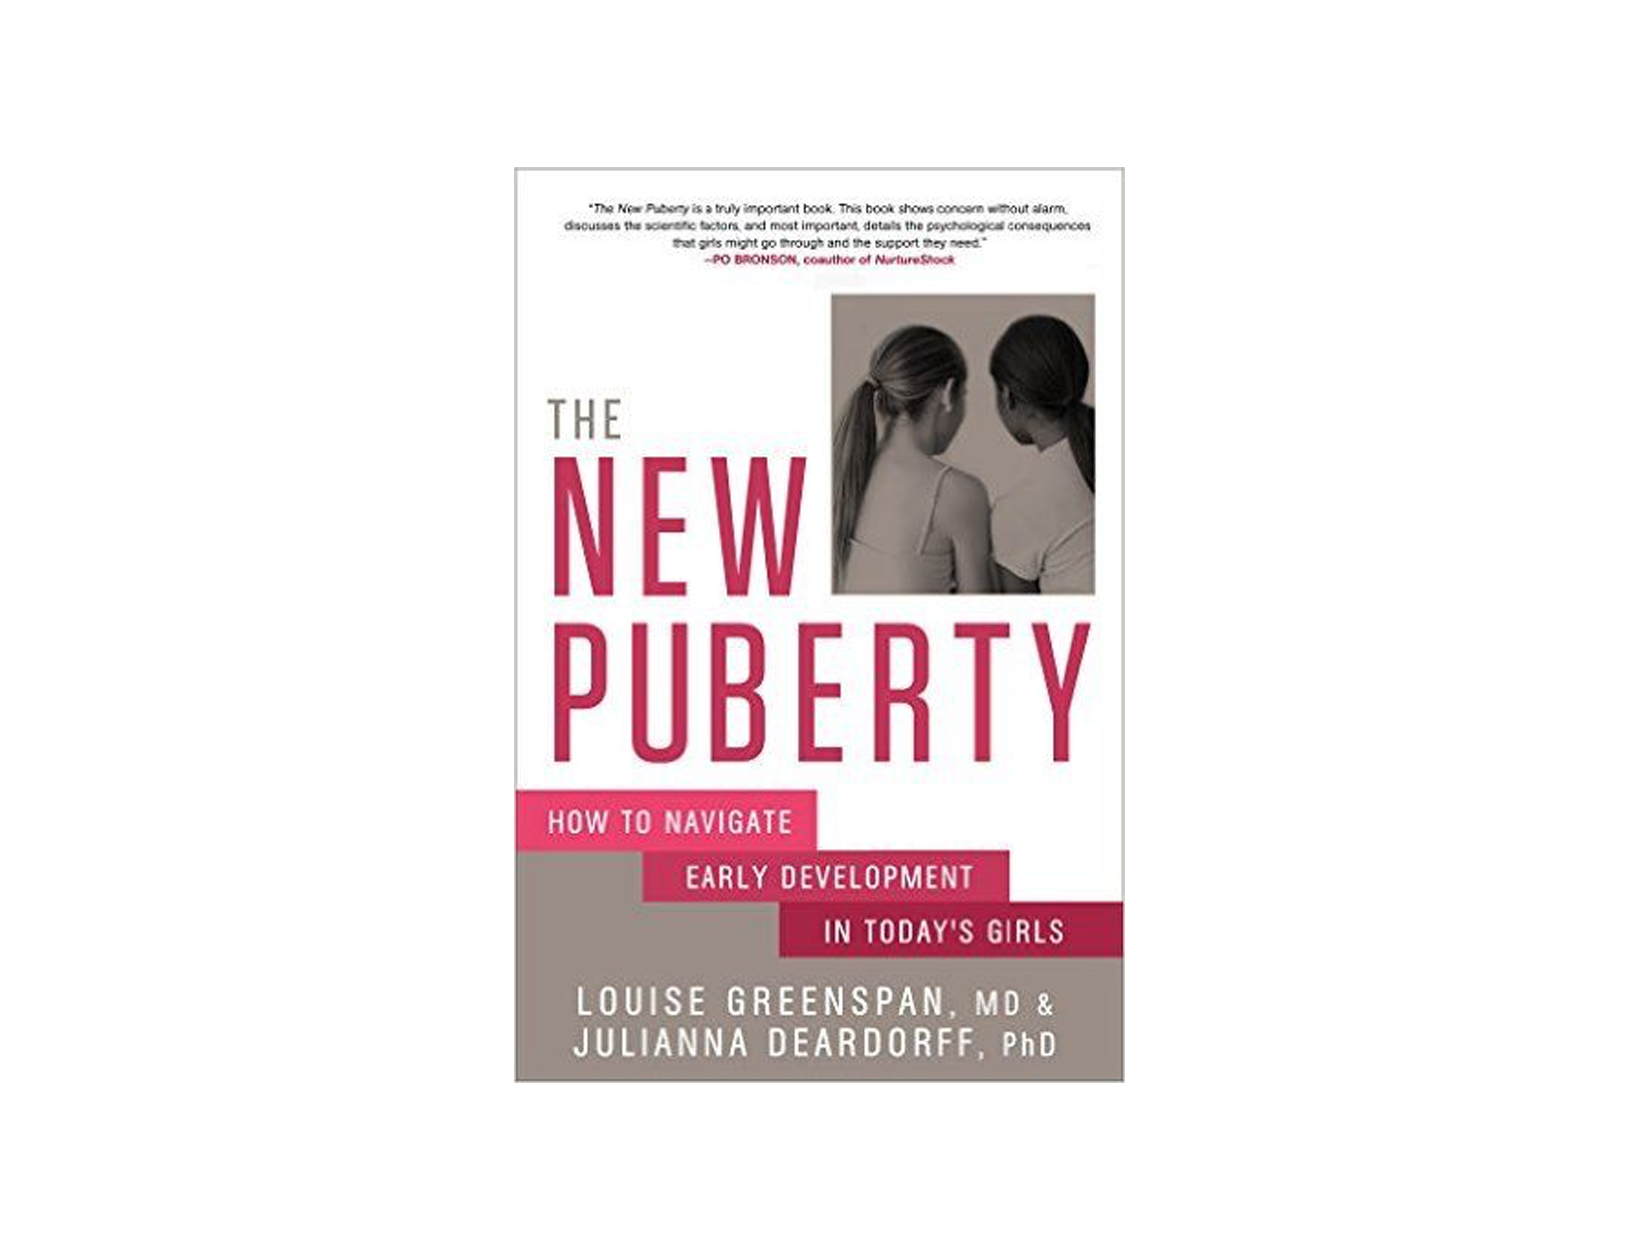 The New Puberty by Louise Greenspan, M.D. & Julianna Deardorff, Ph.D.